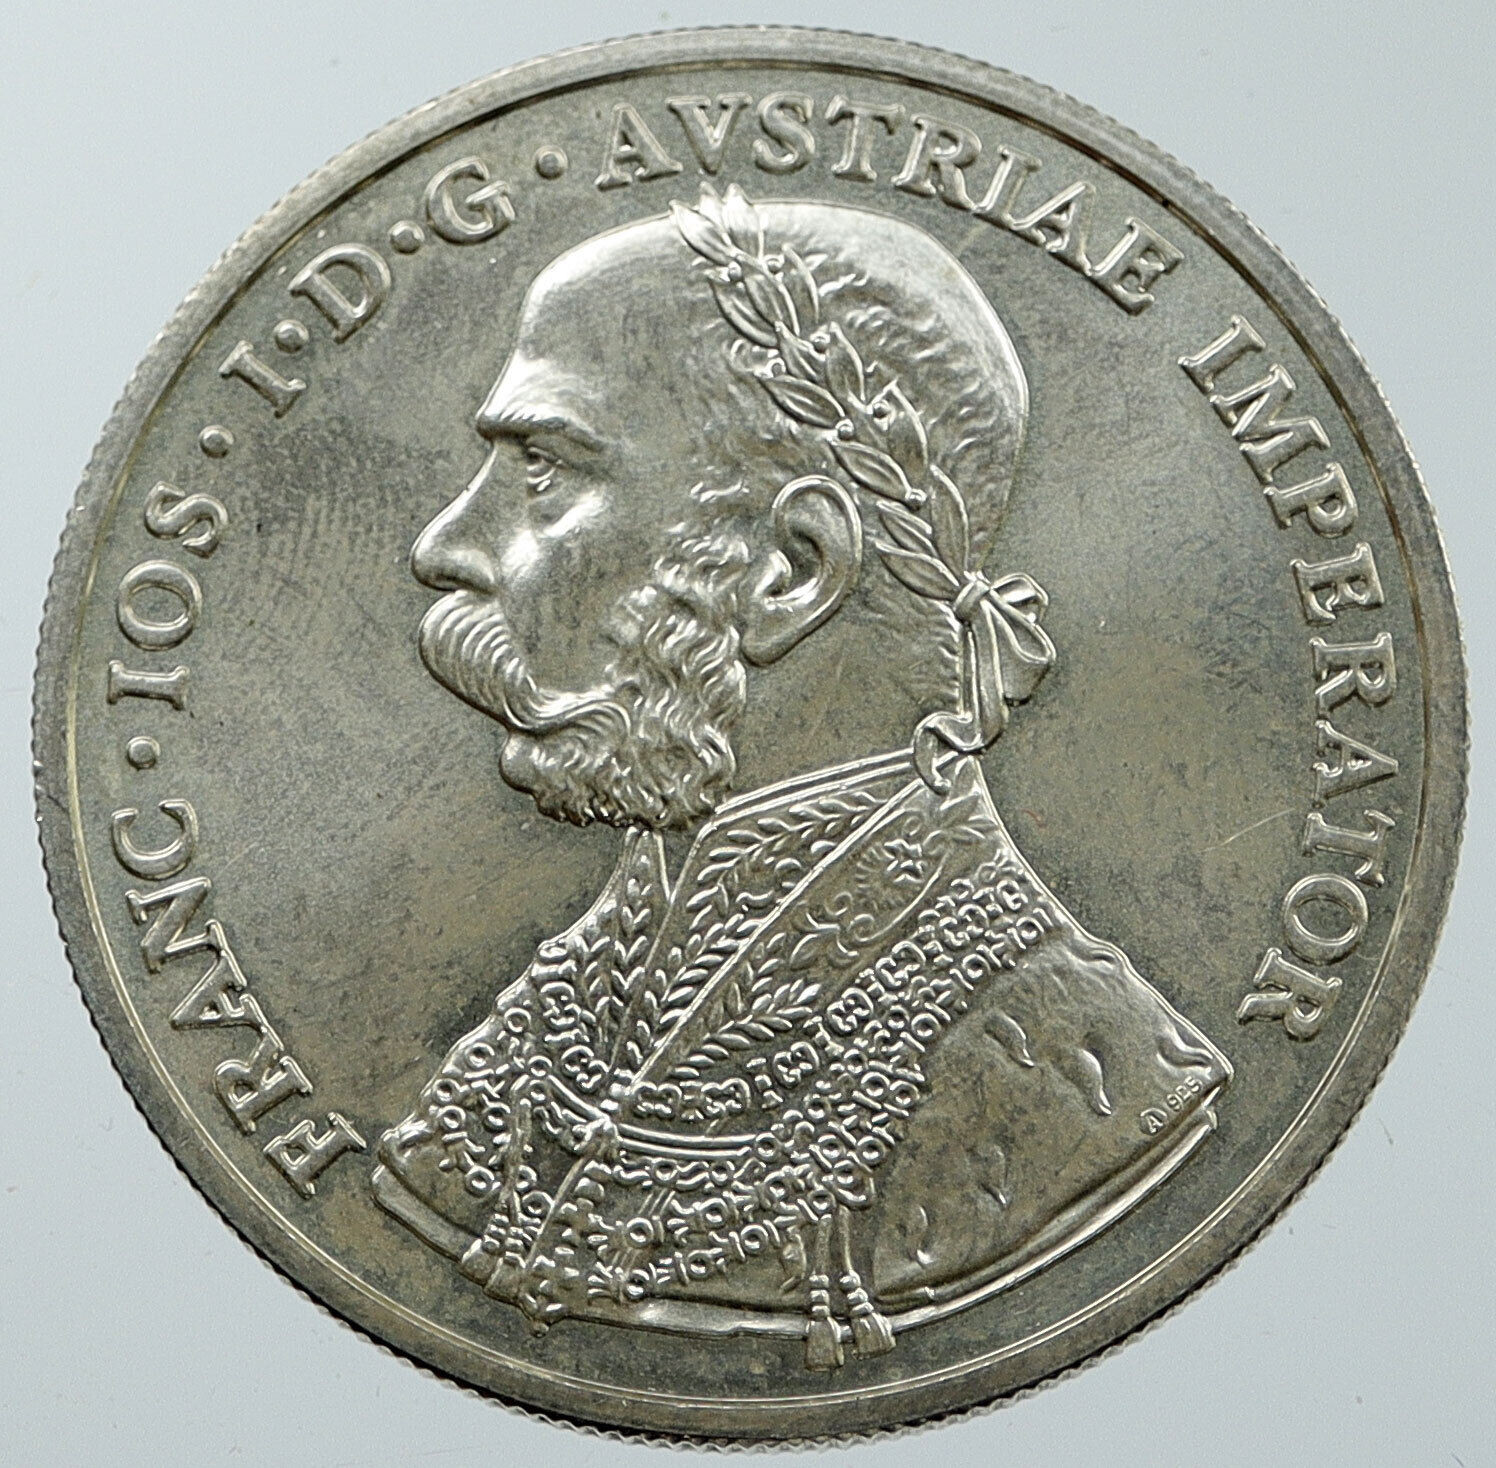 2001 AUSTRIA w KING FRANZ JOSEPH I Old Silver 10 Kreuzer Fantasy Coin i116571